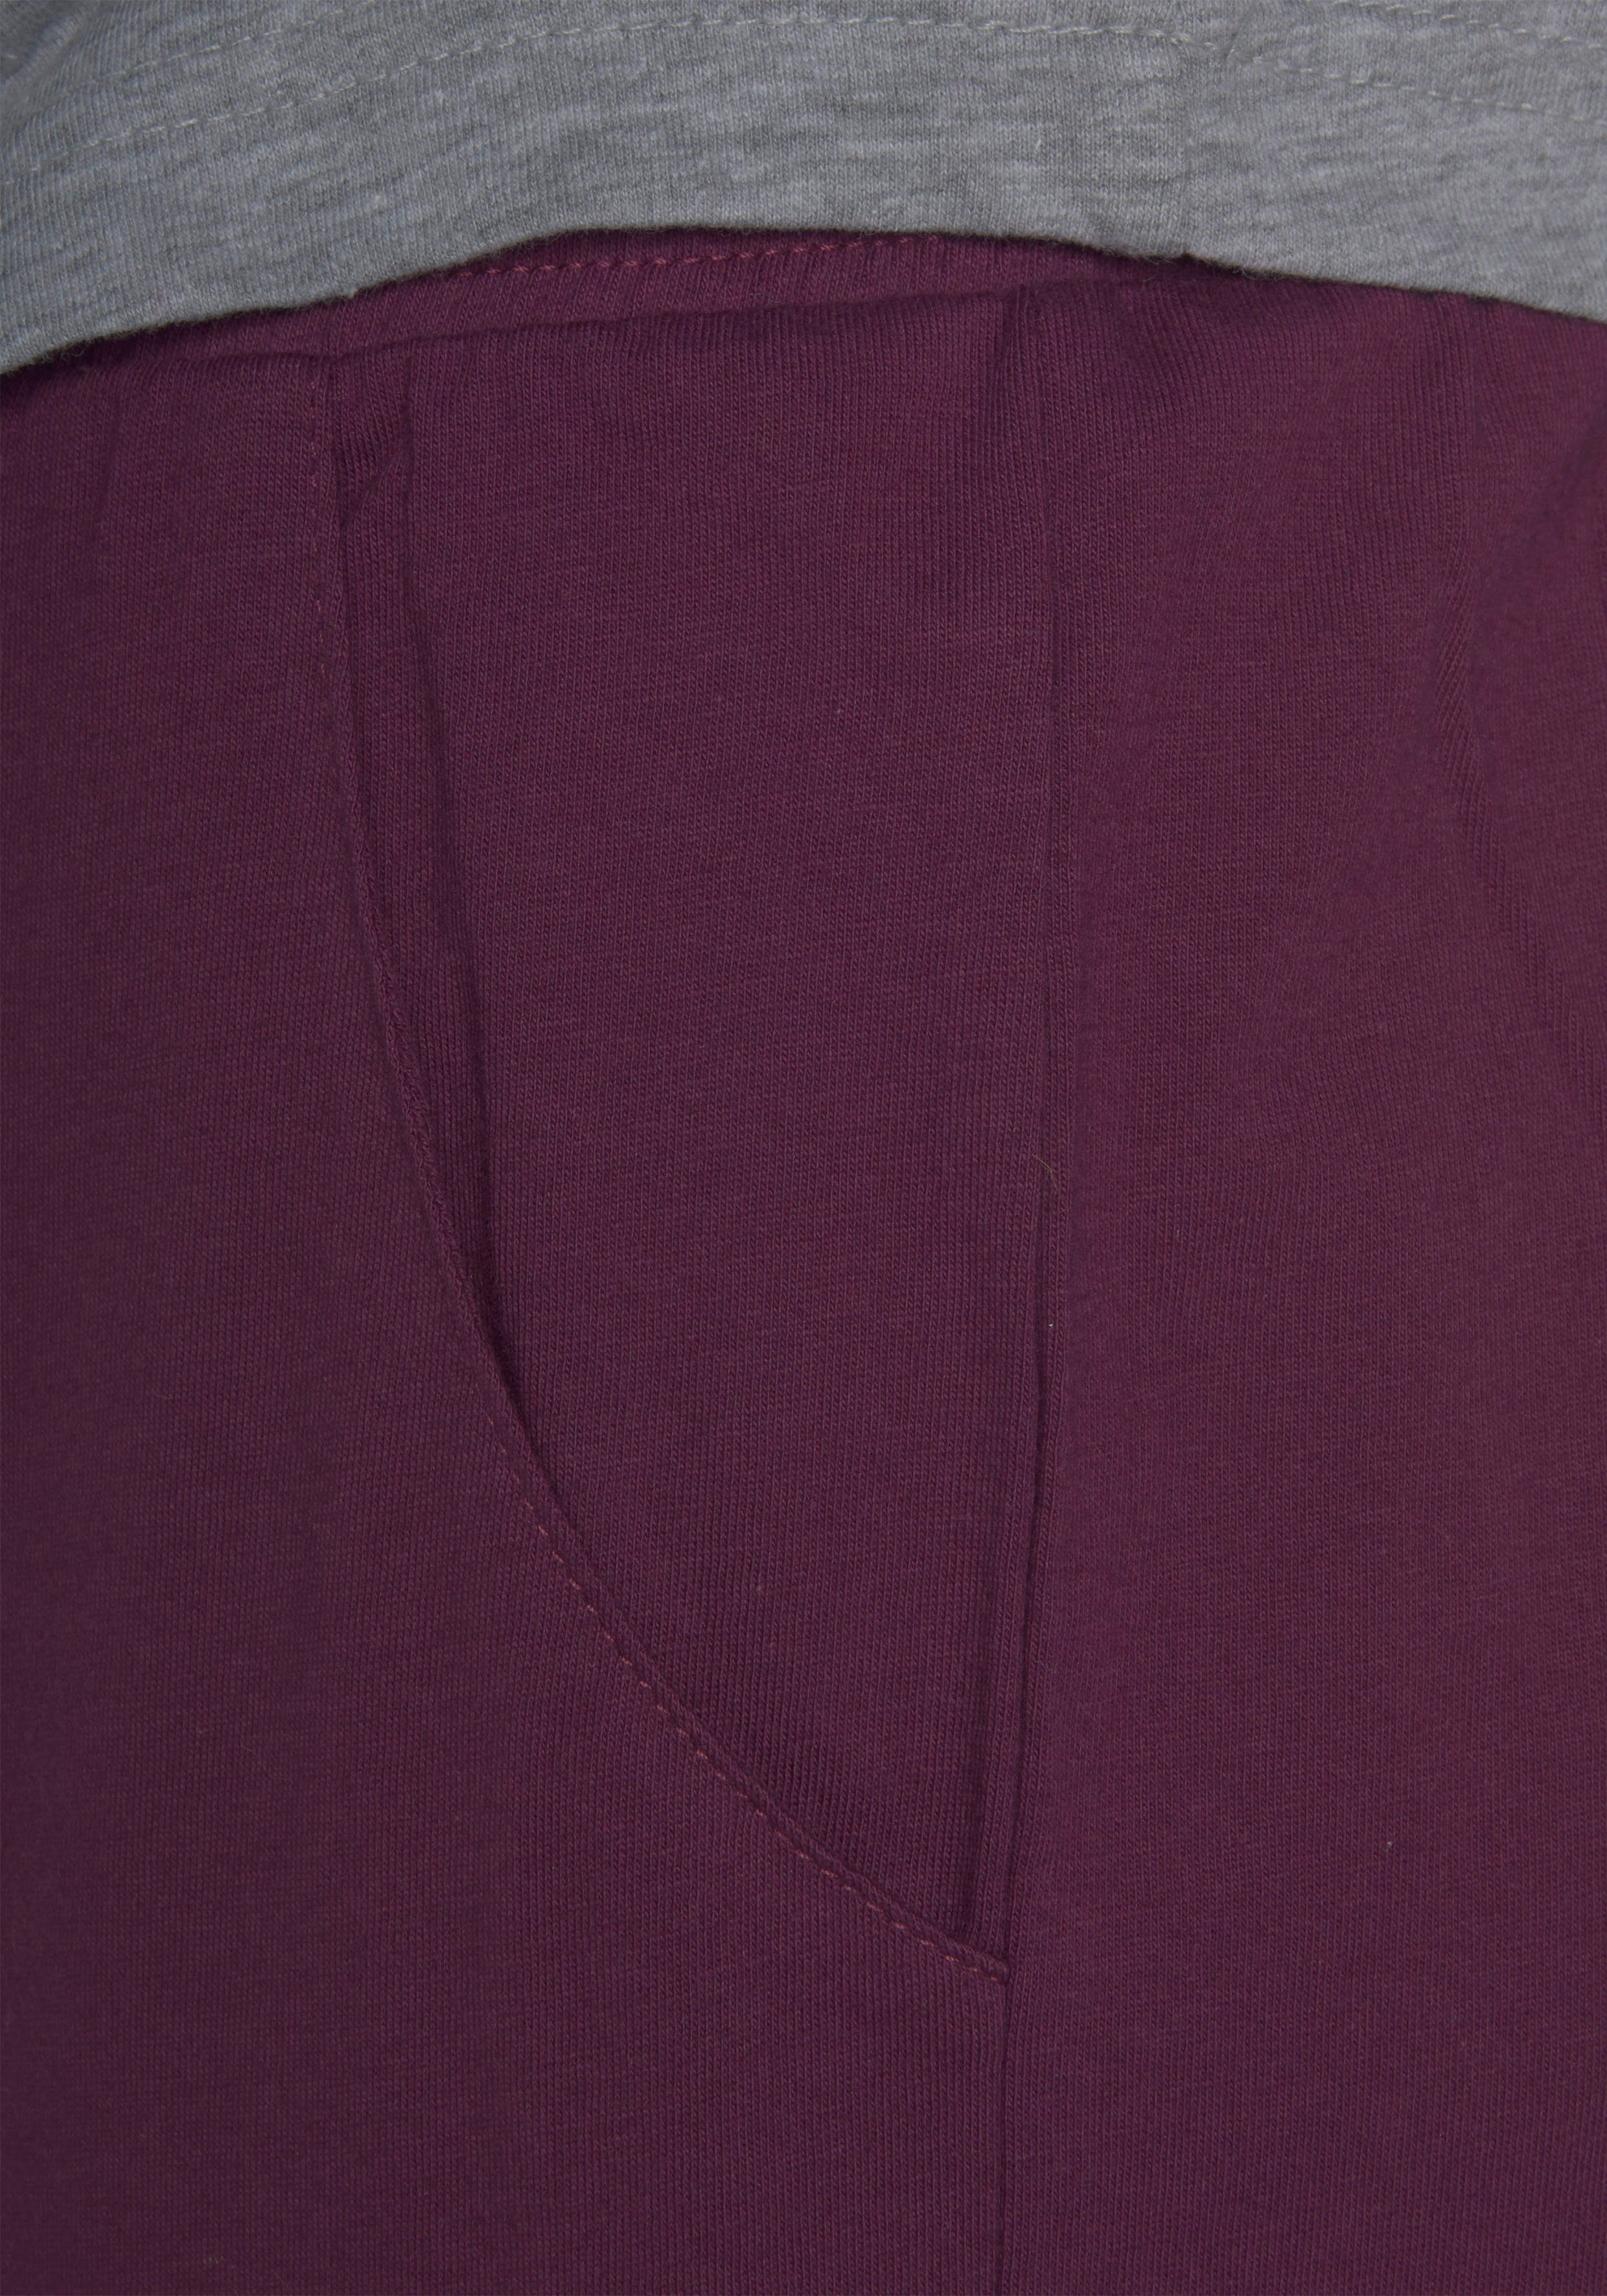 kontrastfarbenen (2 1 bordeaux-grau-meliert Raglanärmeln mit Pyjama Stück) KangaROOS tlg.,